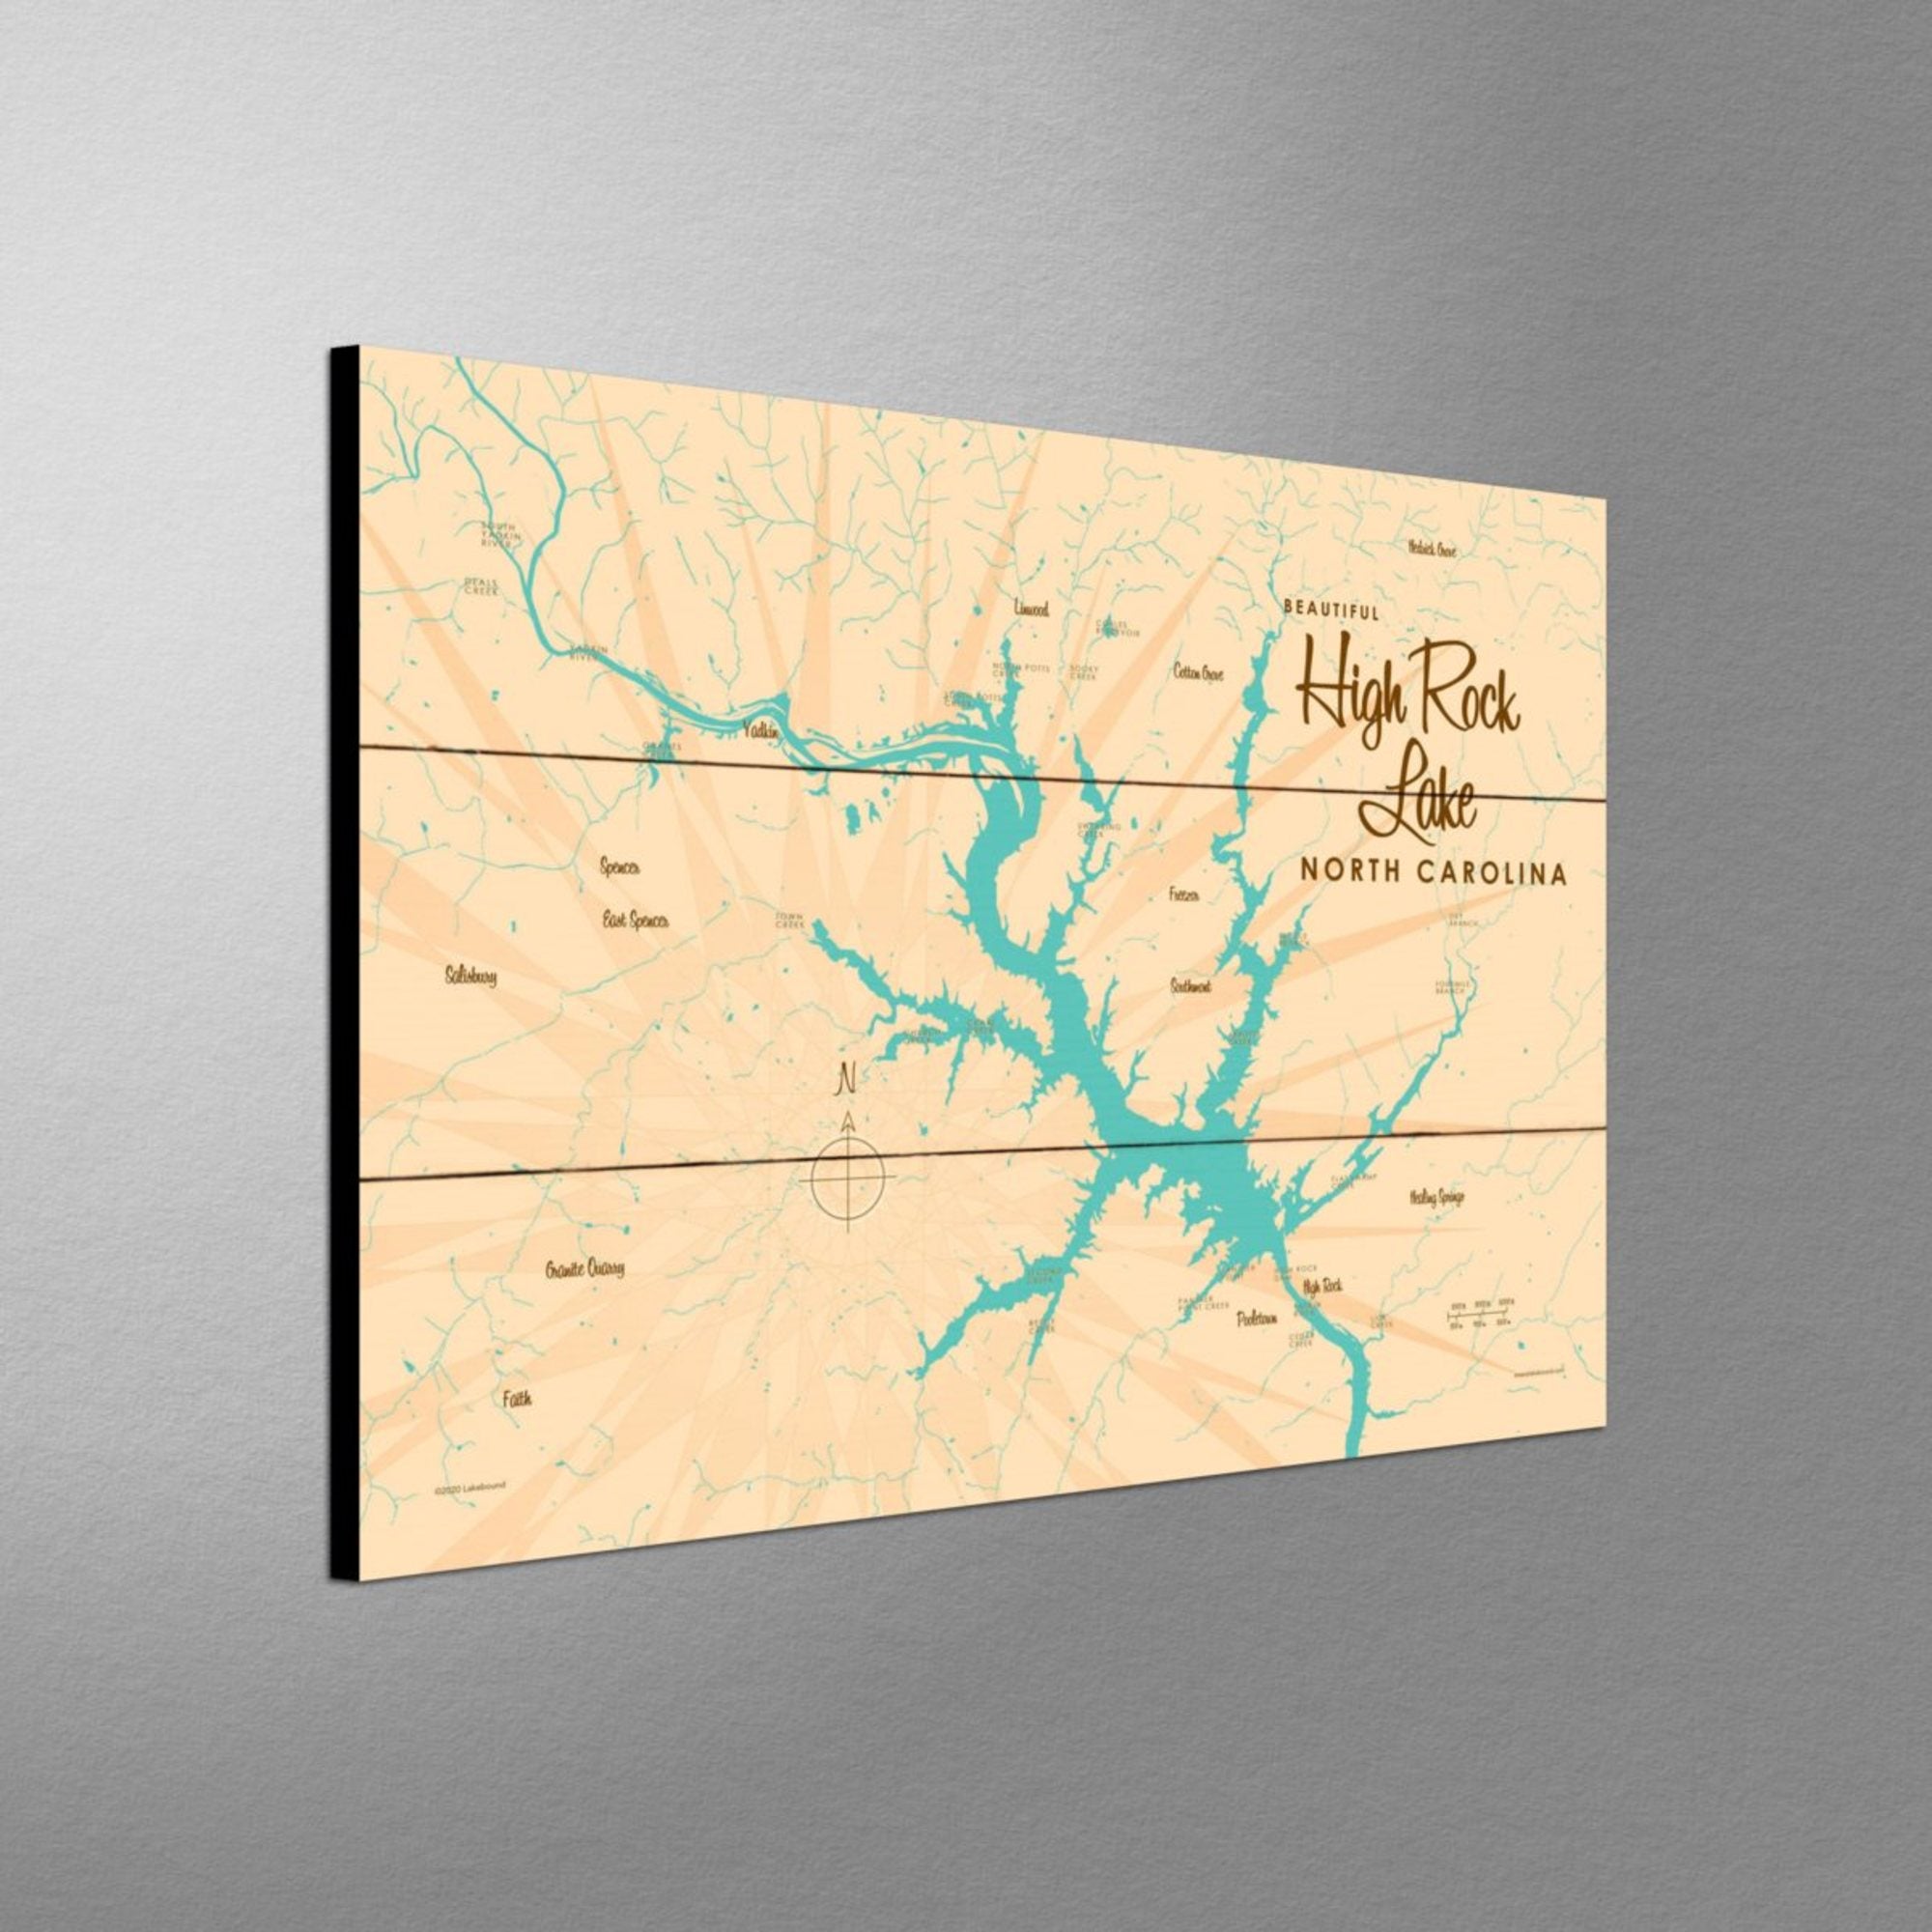 High Rock Lake North Carolina, Wood Sign Map Art